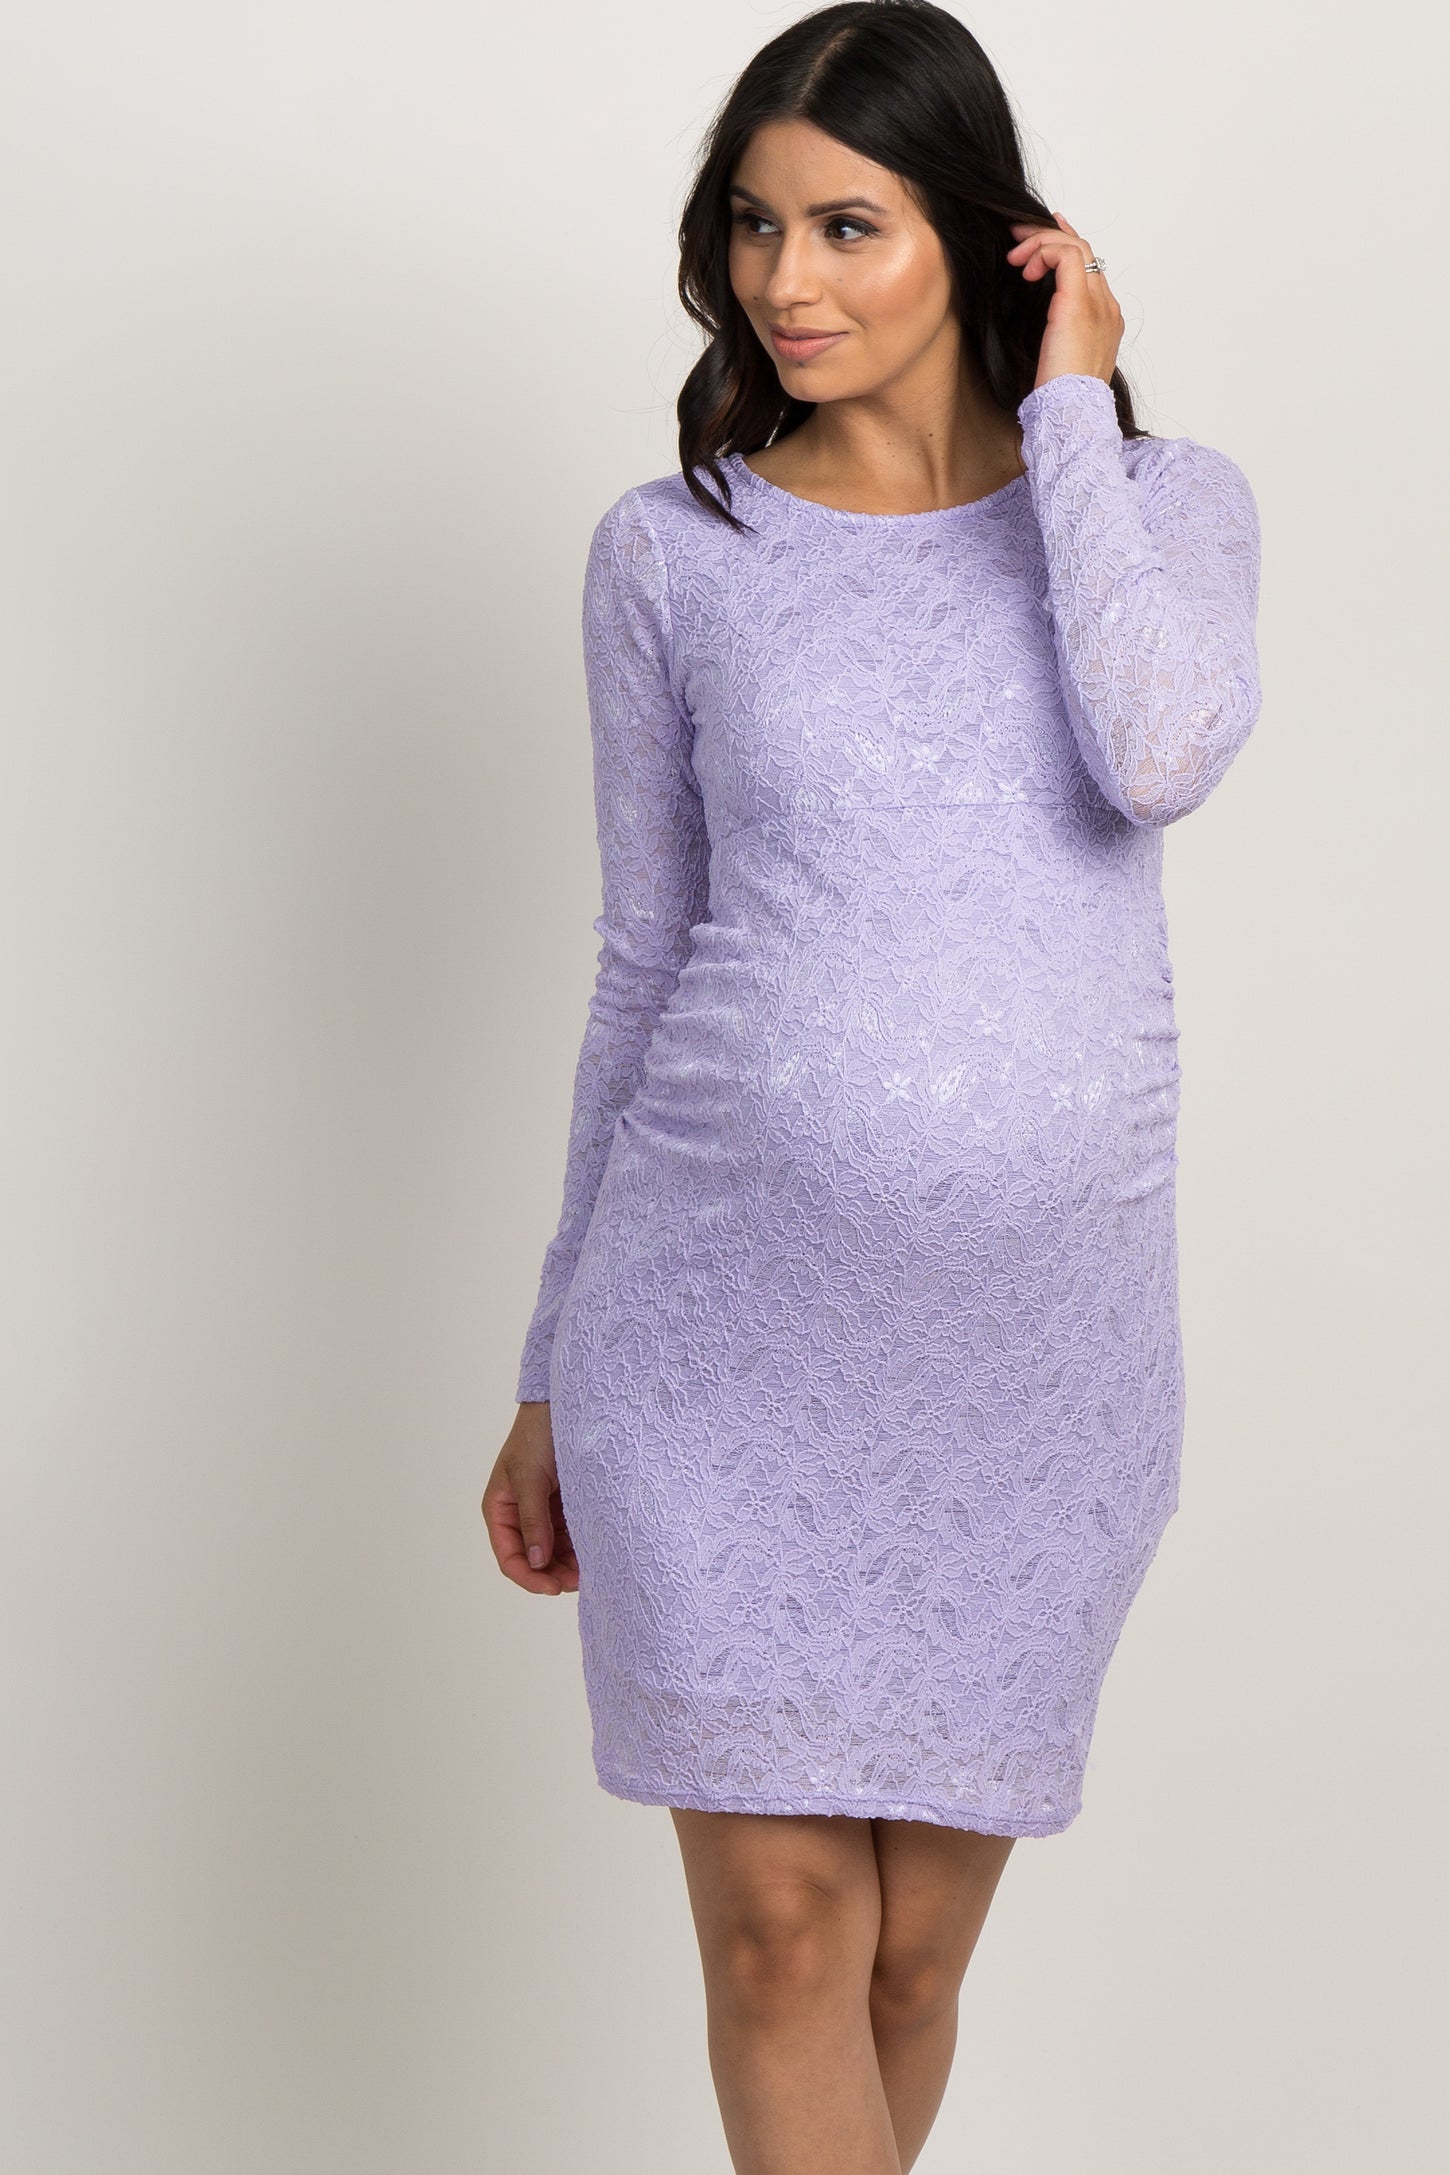 lavender lace dress sleeve